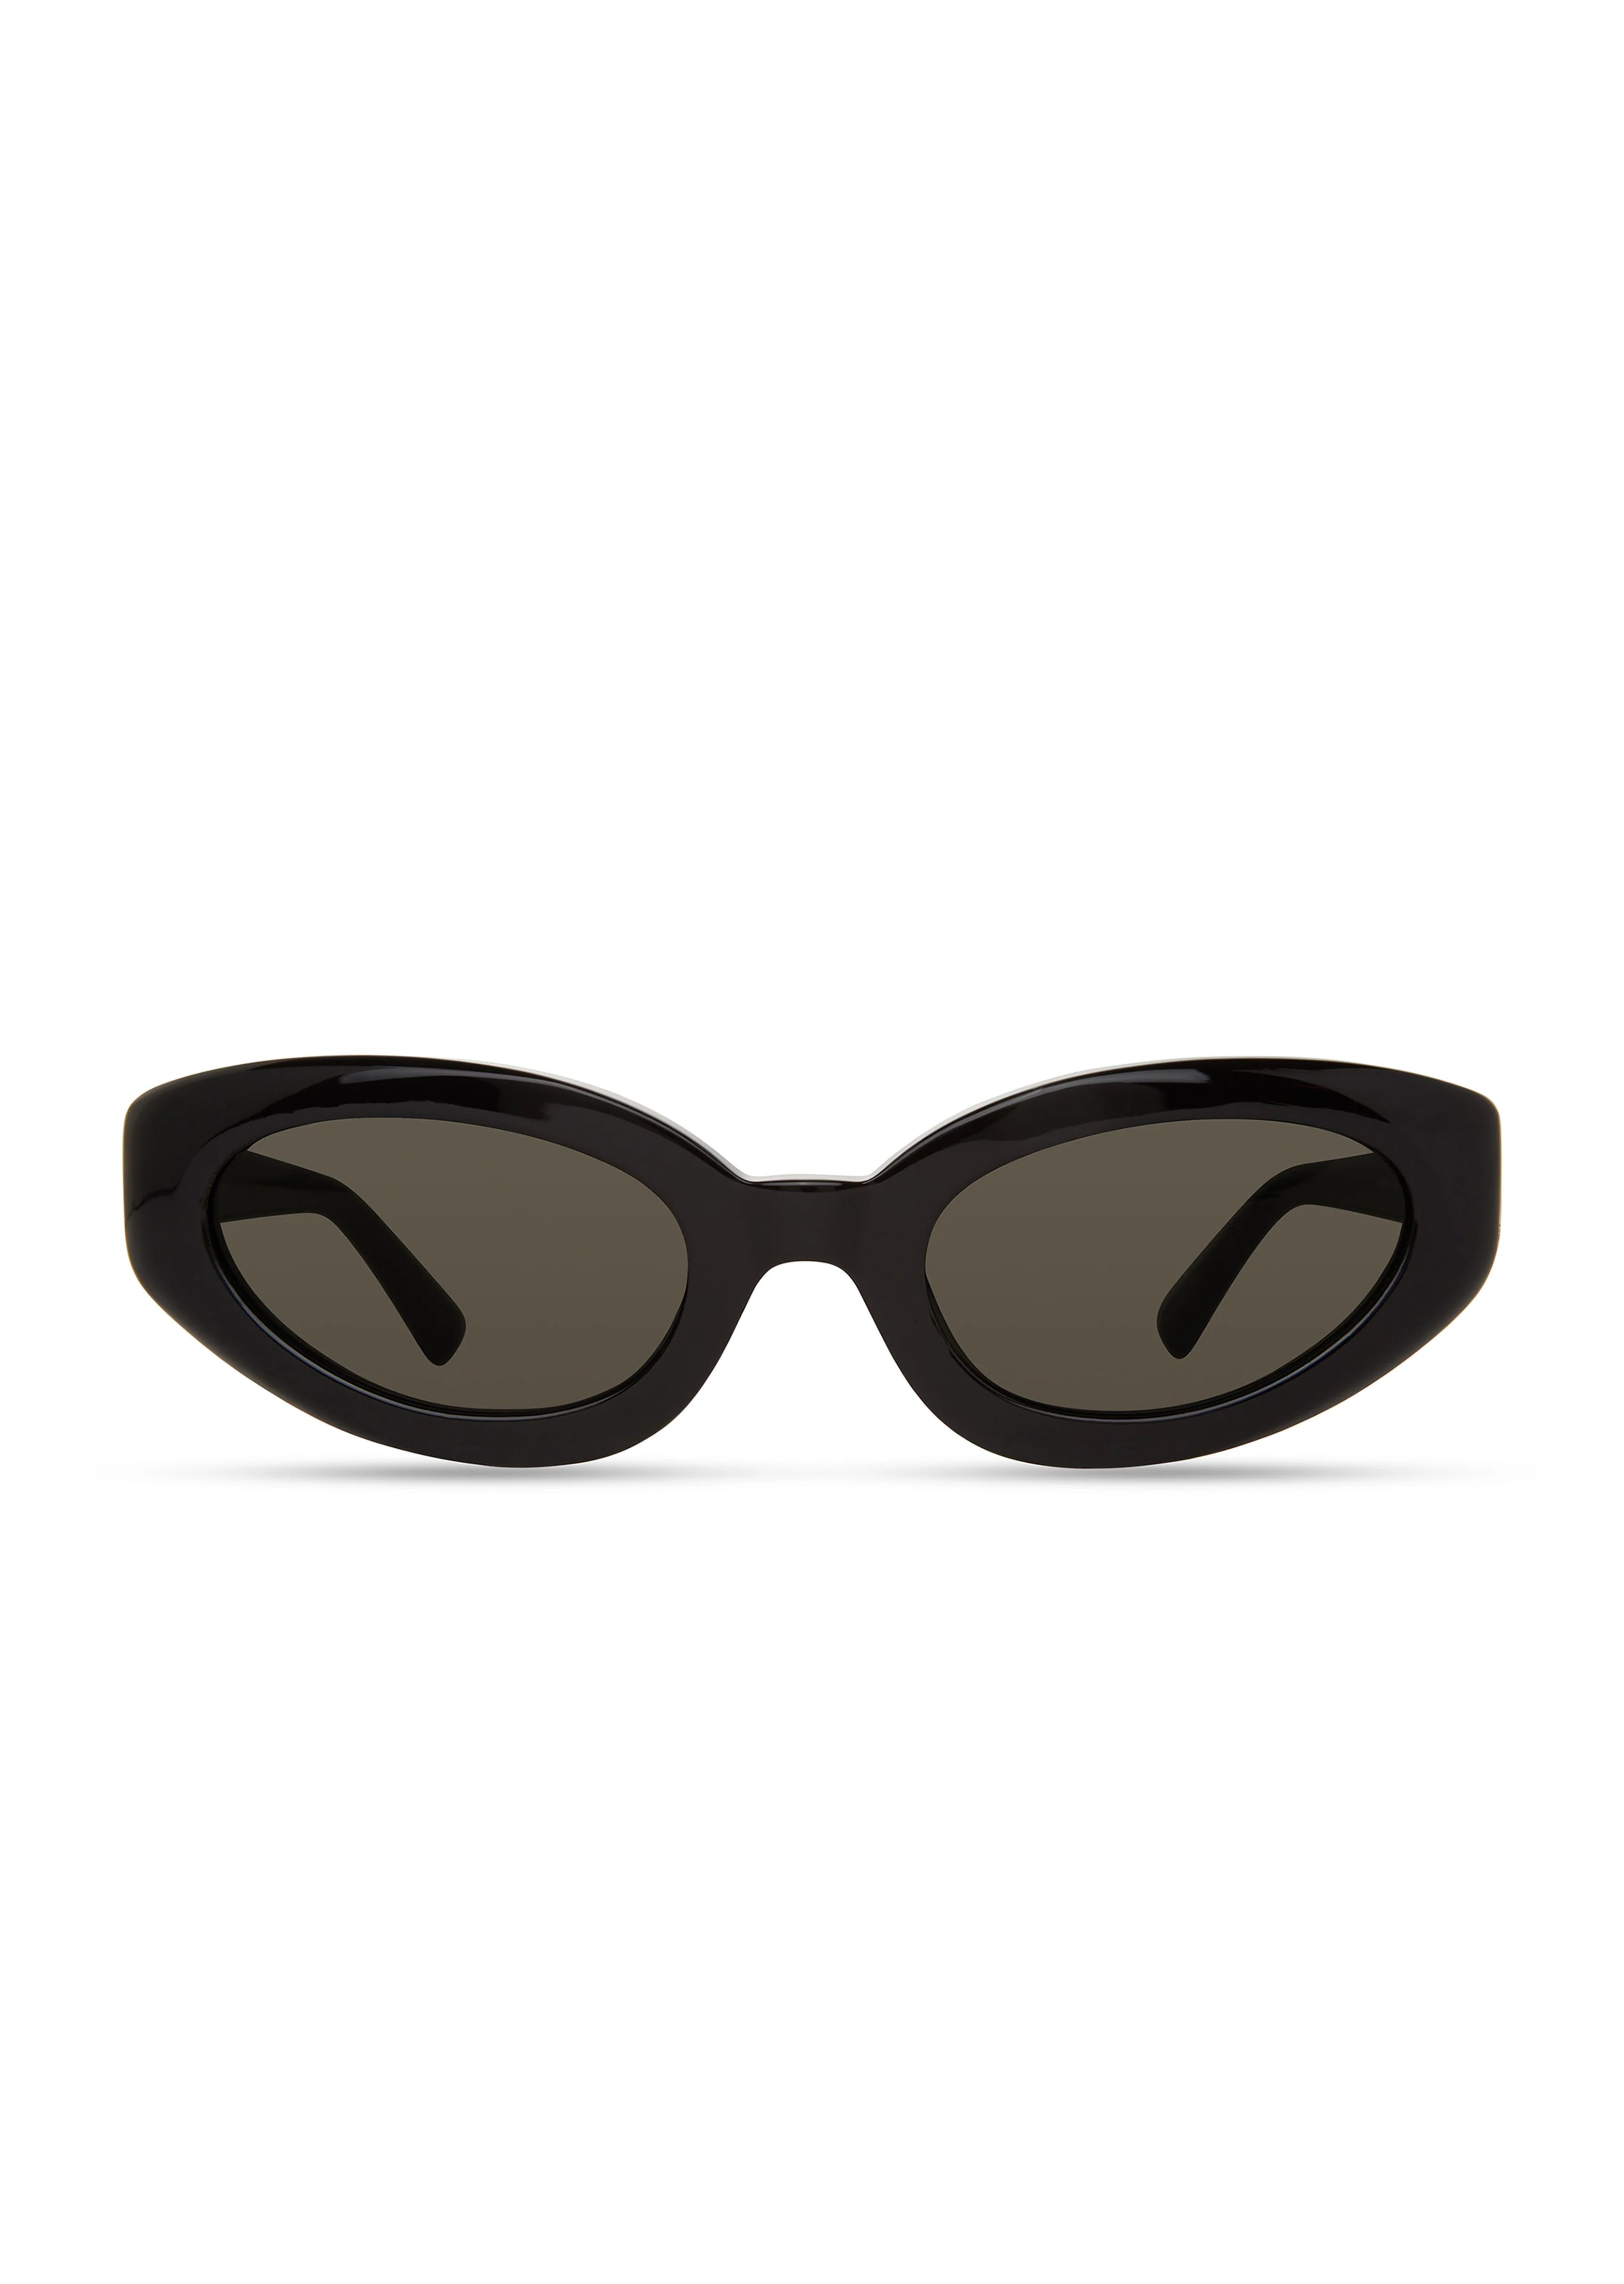 Vesper Narrow Cat Eye Sunglasses | Derek Lam 10 Crosby | Derek Lam